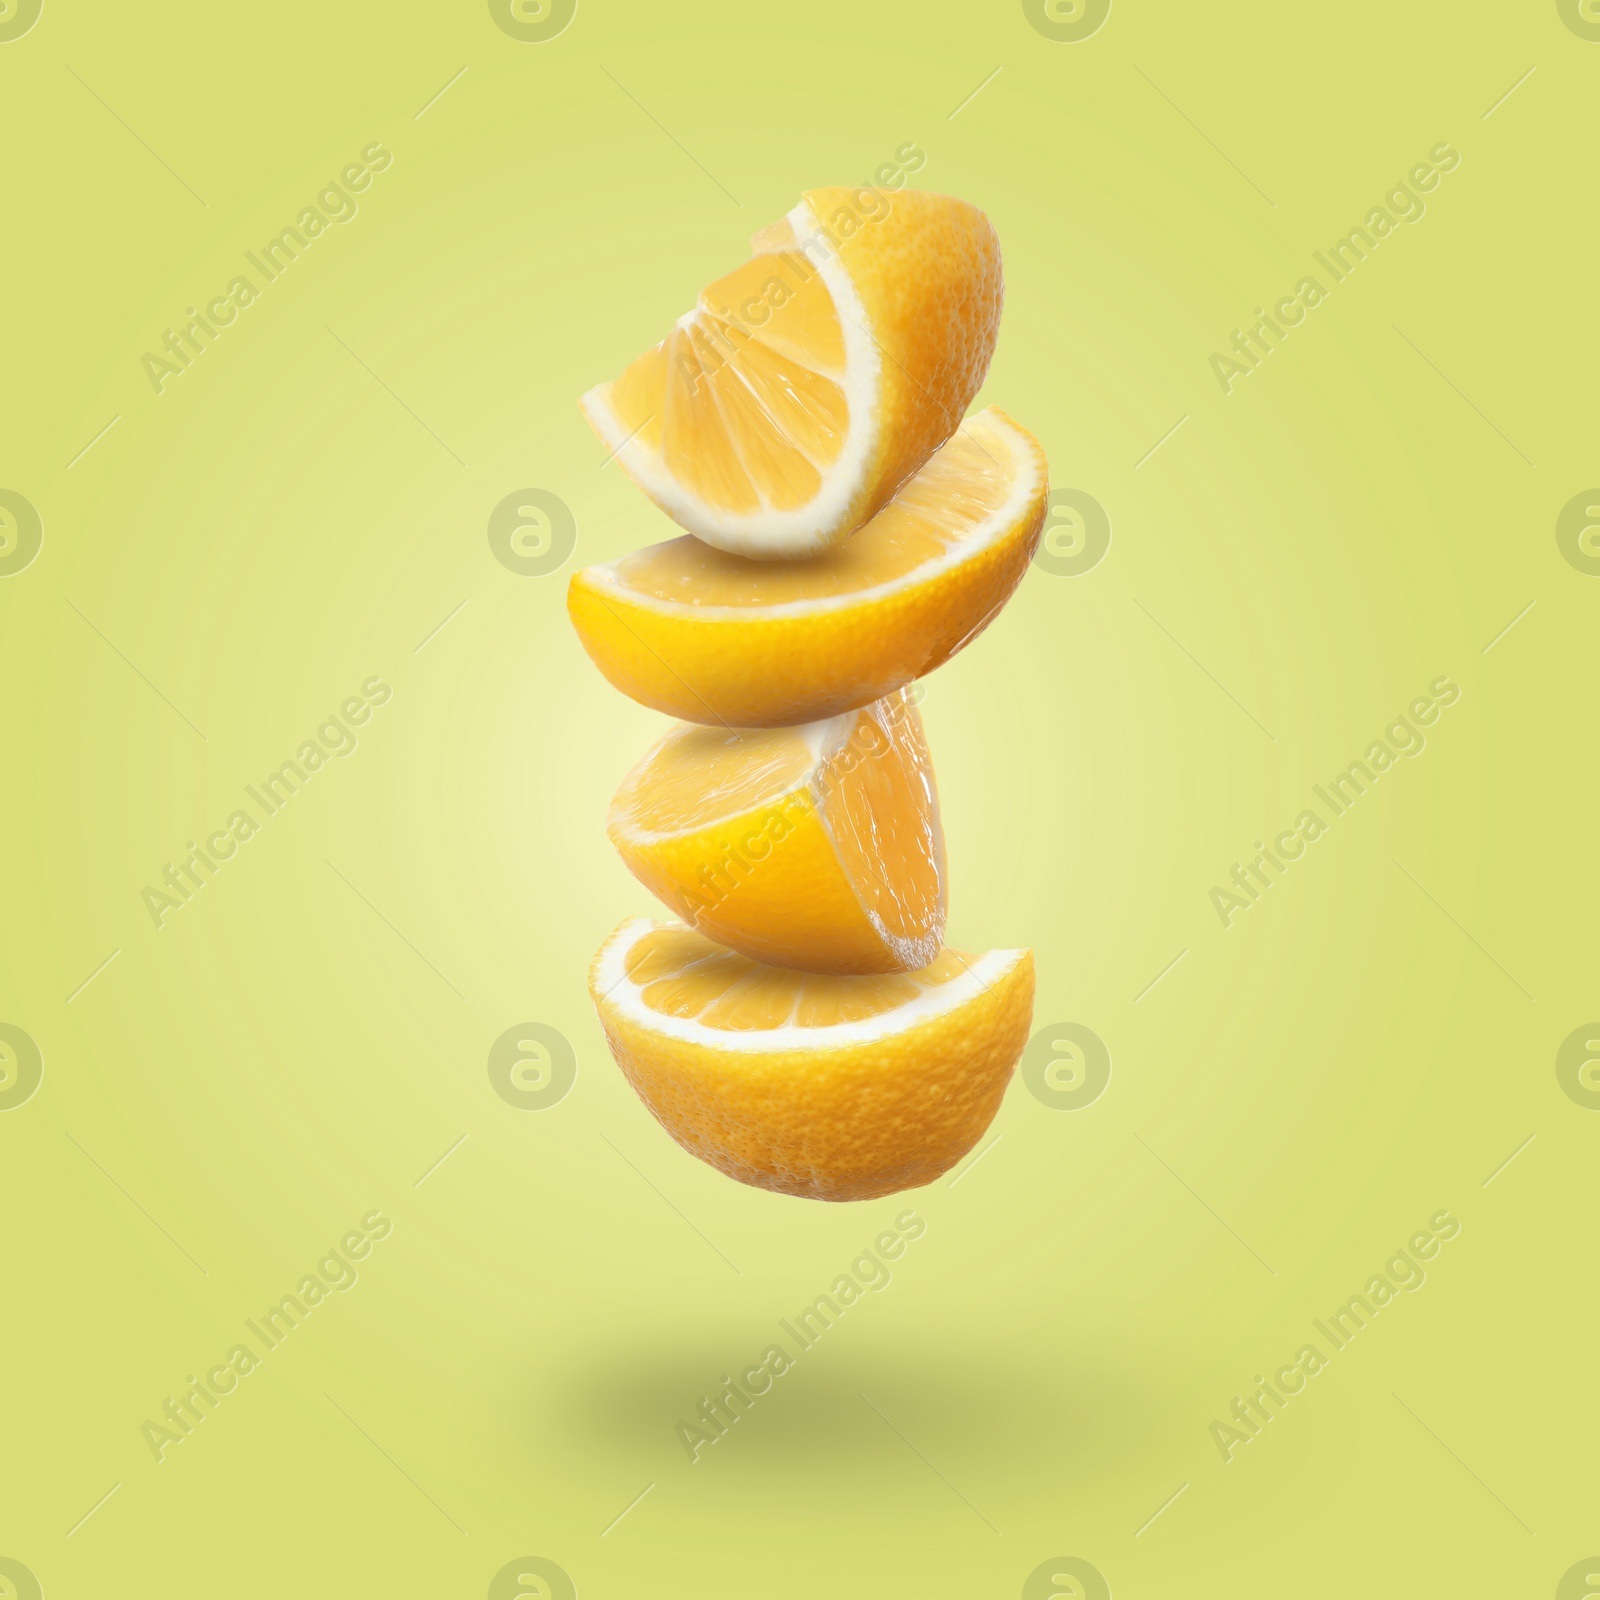 Image of Cut fresh ripe lemons falling on yellow background